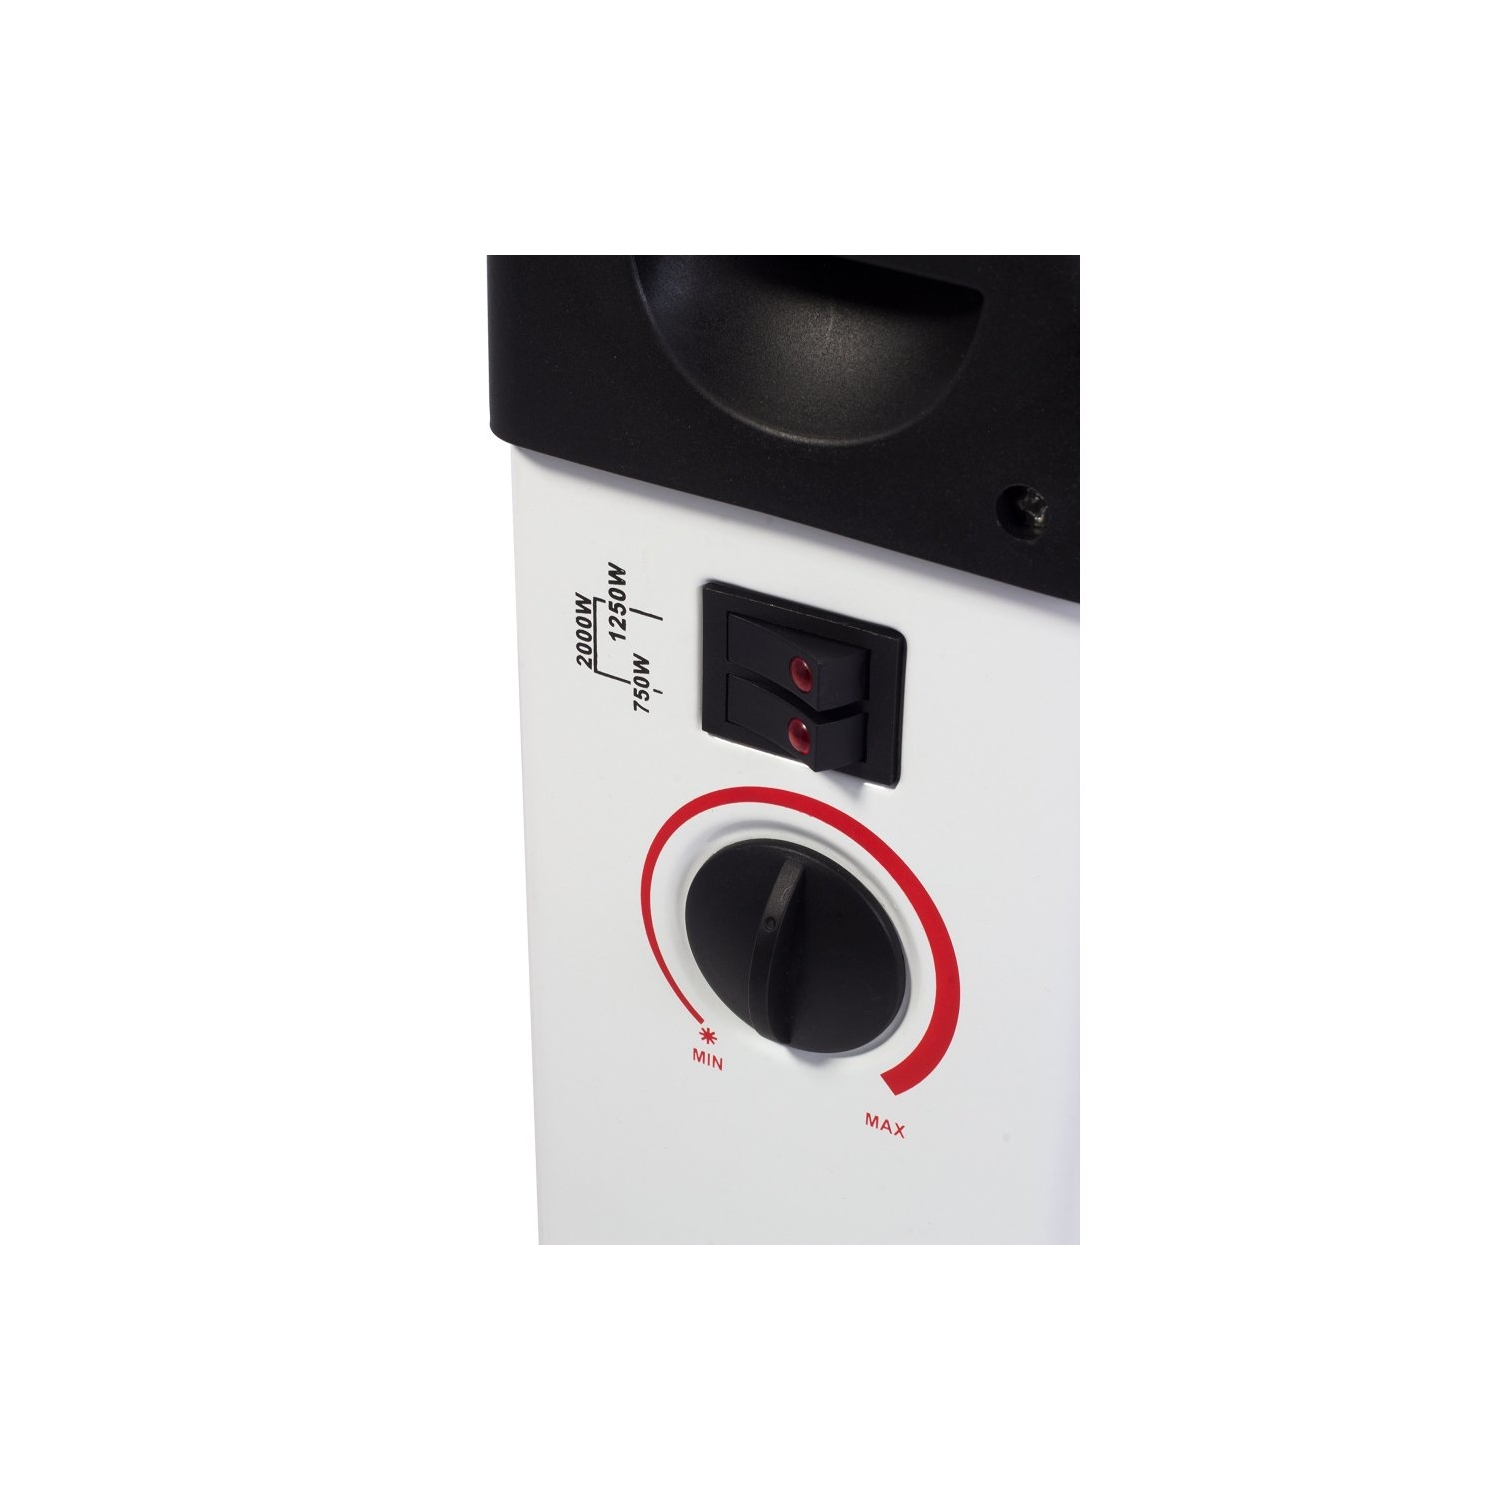 Igenix 2kw Convertor Heater (white) - 1